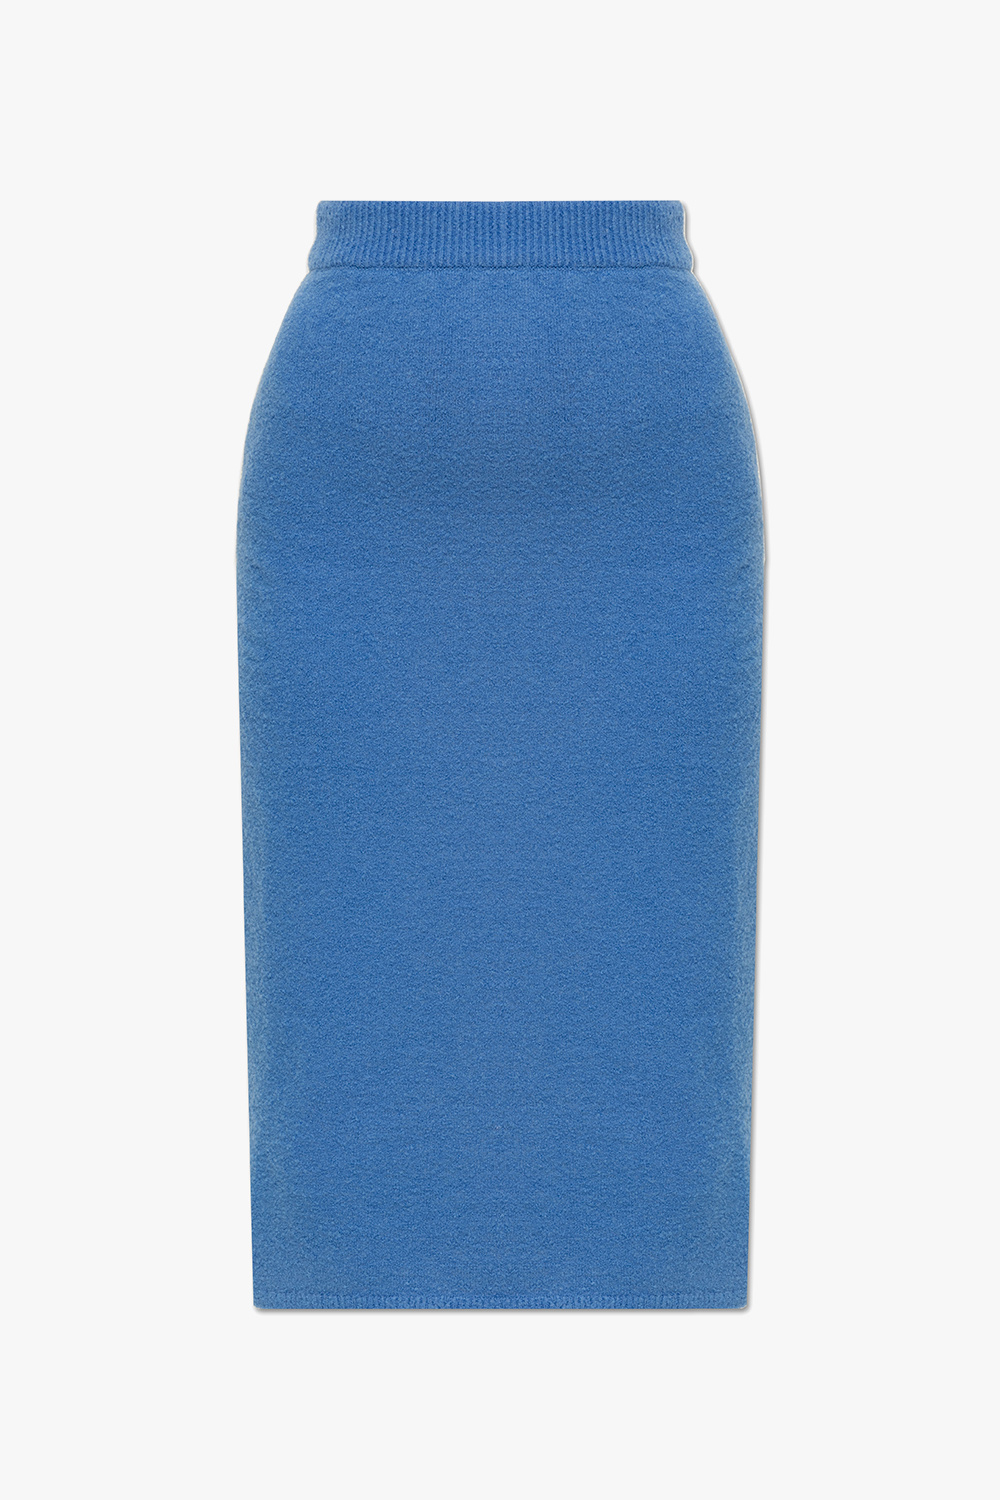 Nanushka ‘Jorna’ pencil skirt